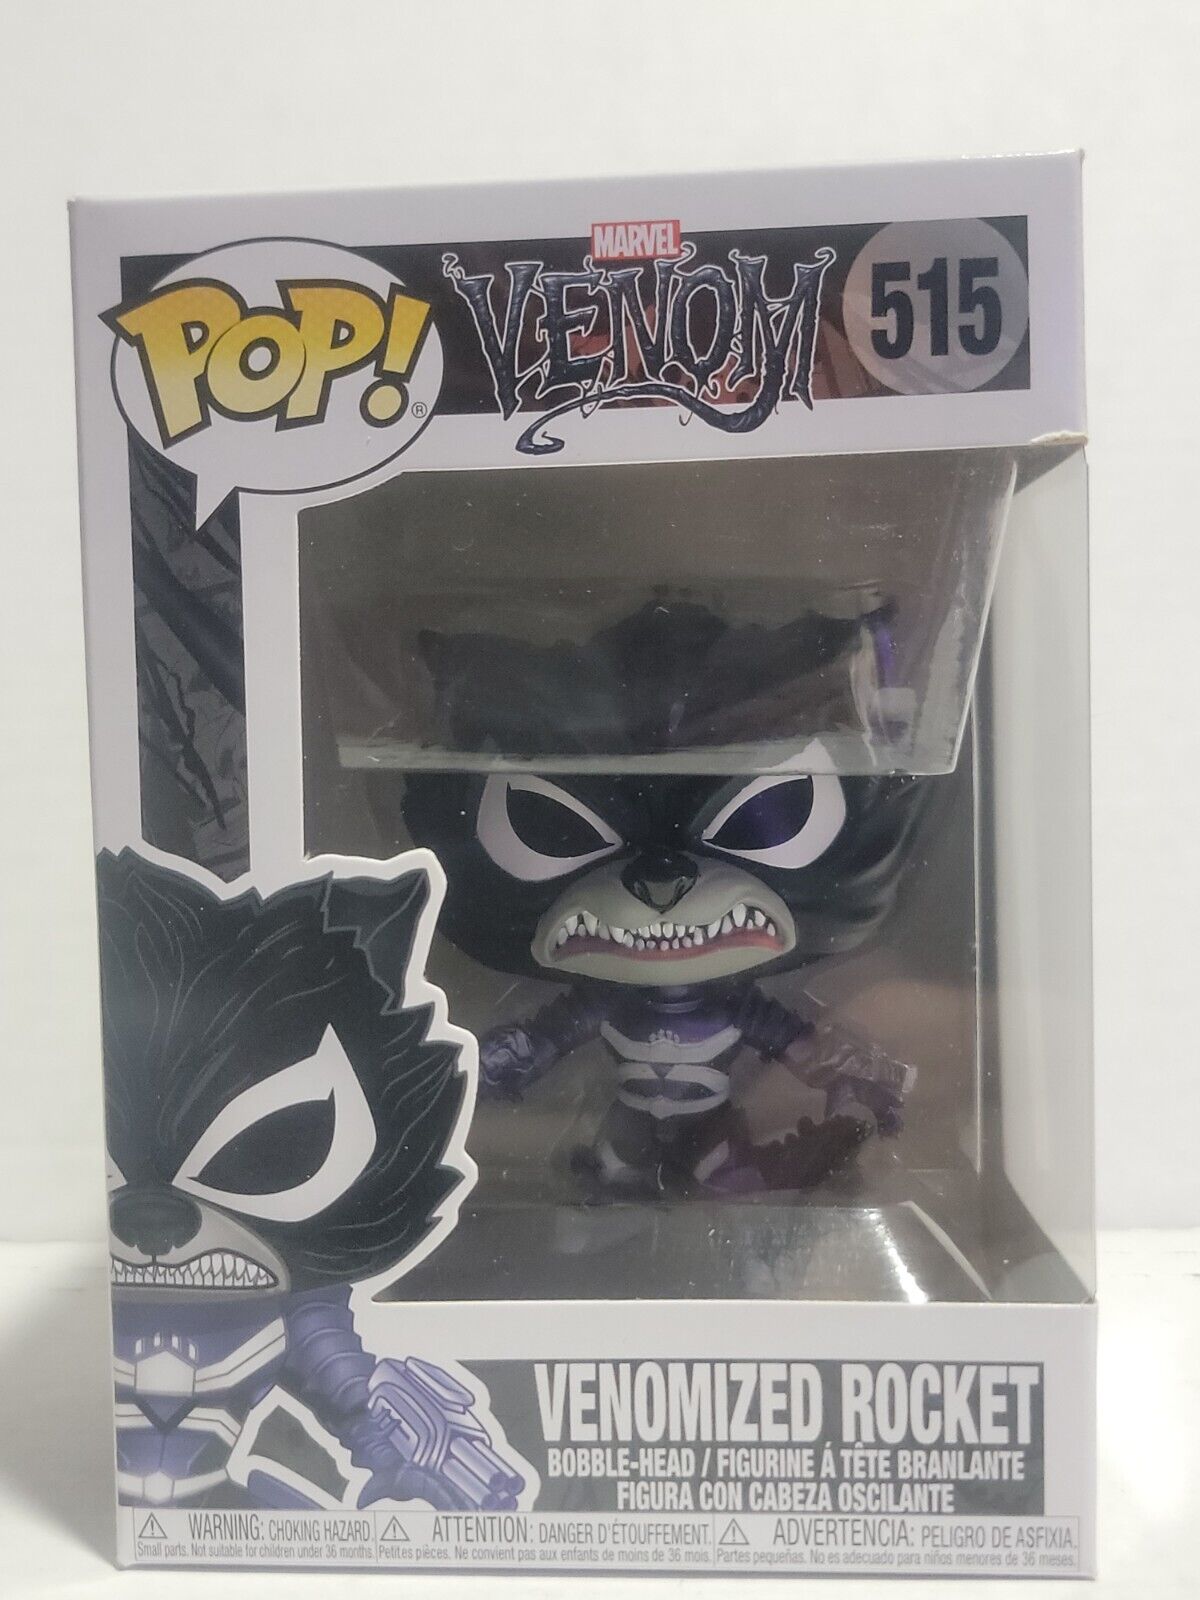 2019 Funko Pop Marvel Venom Venomized Rocket #515 Bobblehead Figure